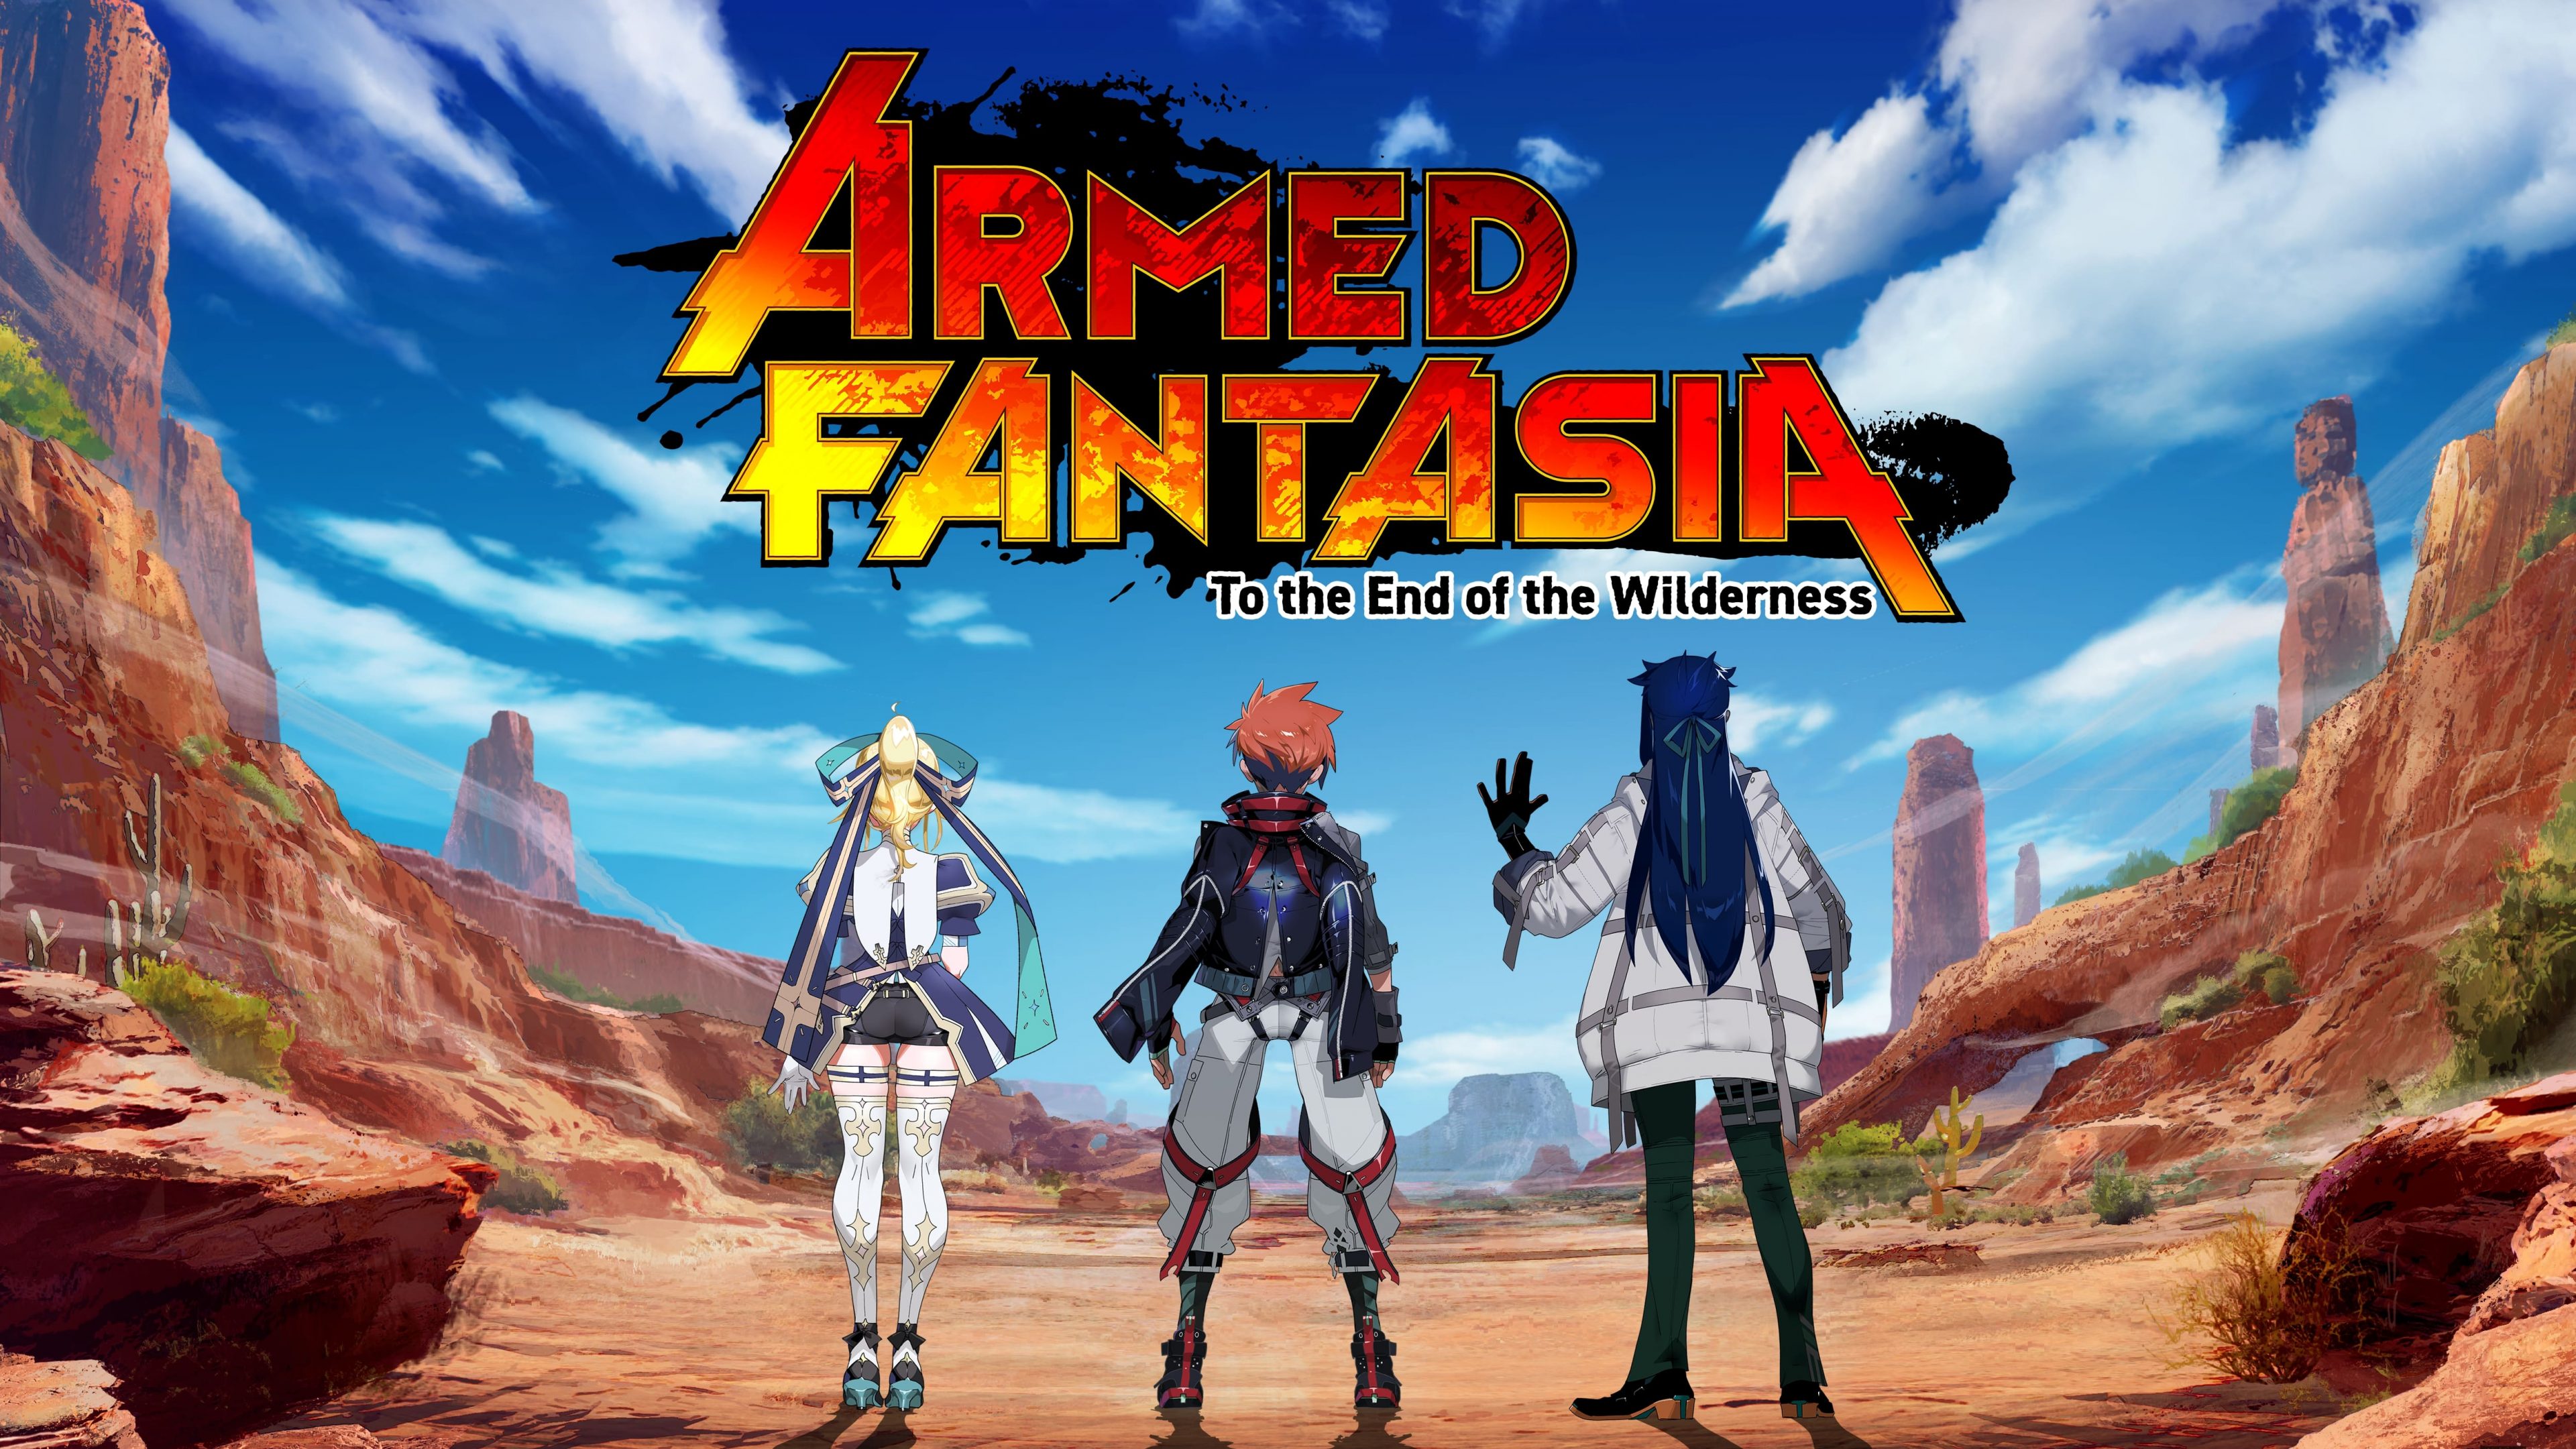 Armed fantasia keyart scaled 2